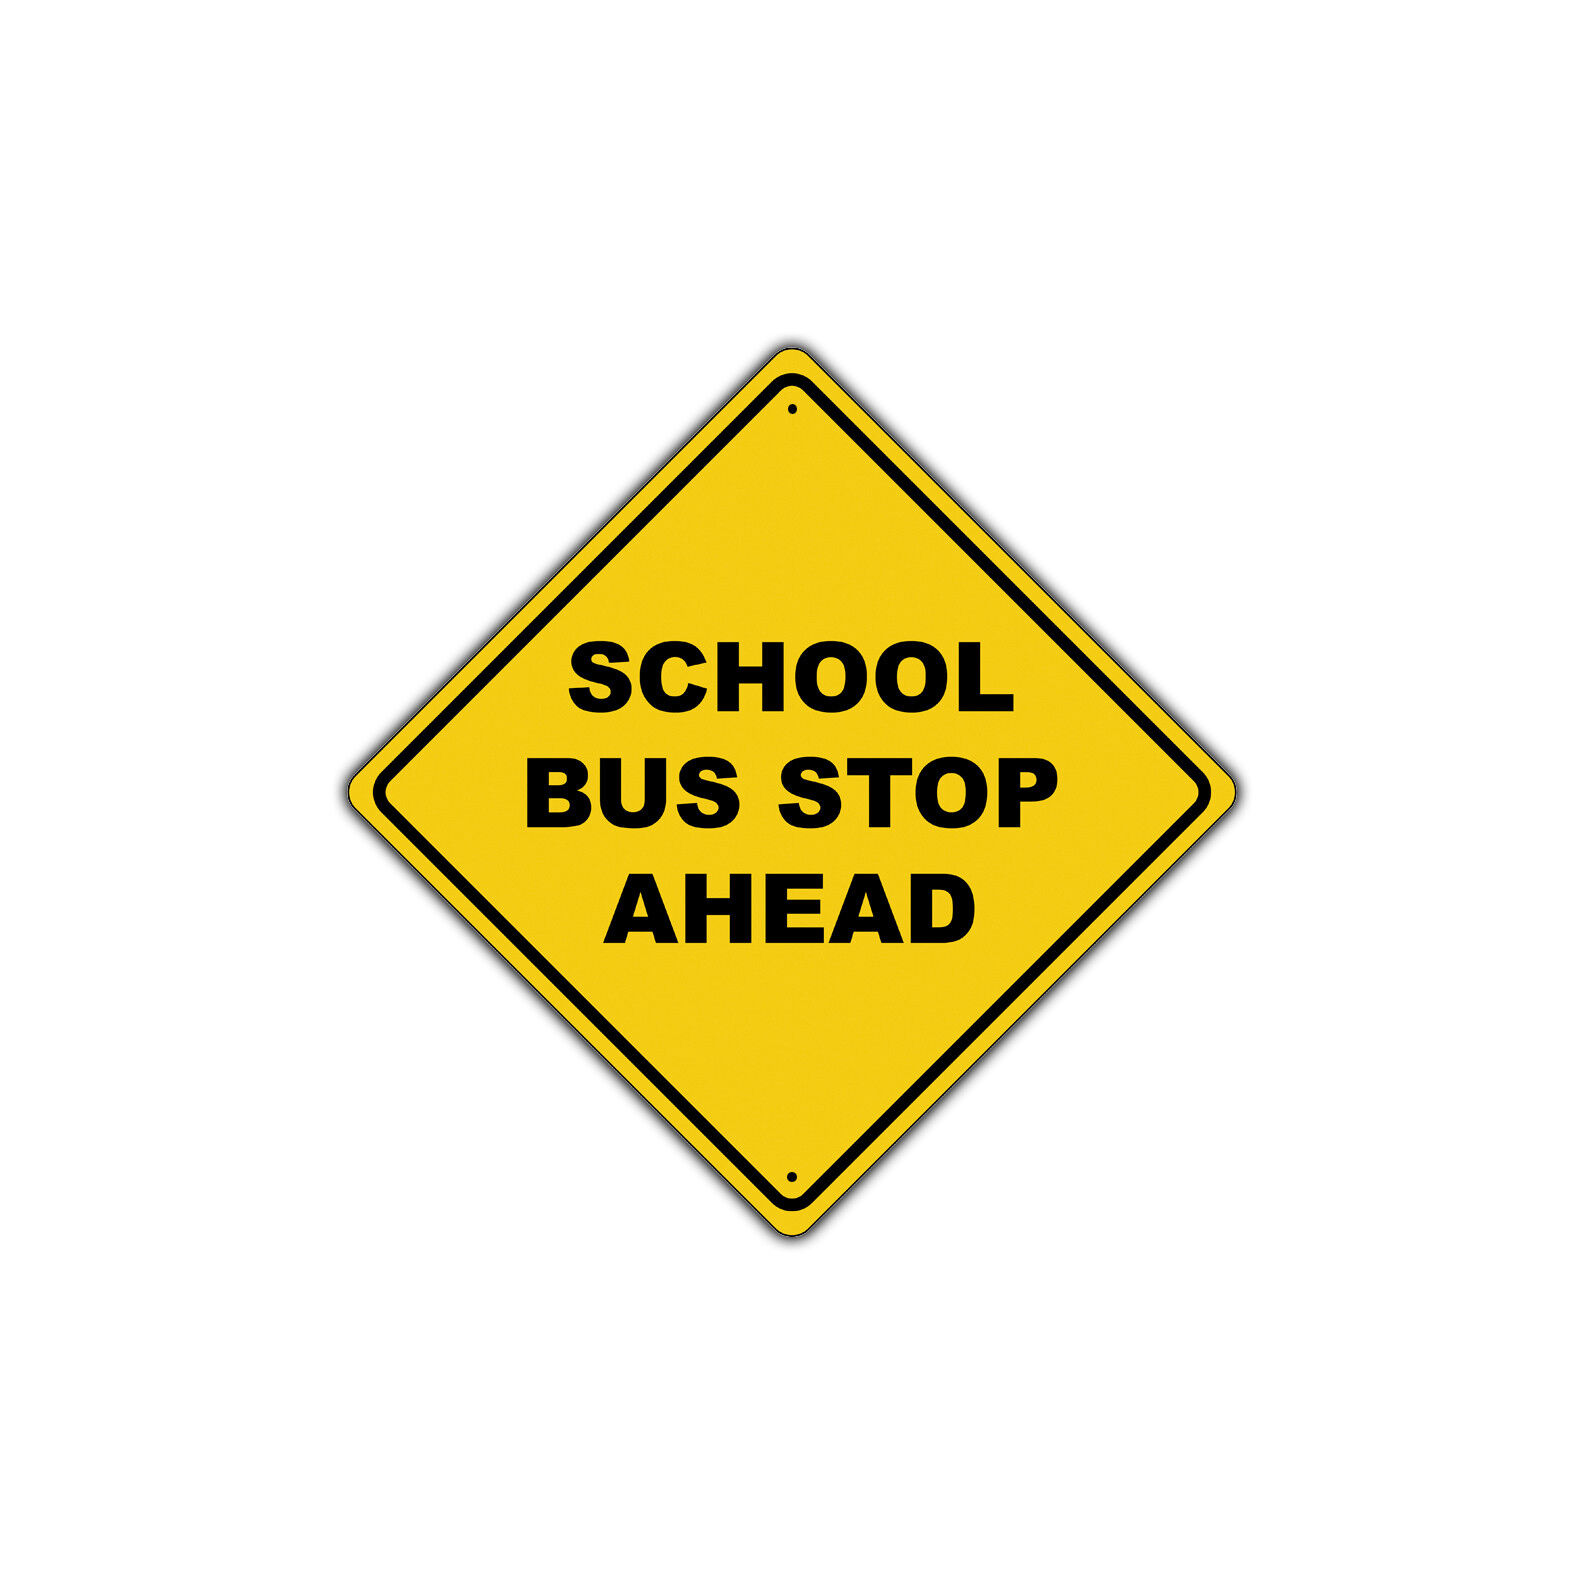 School Bus Stop Ahead Diamond Safety Notice Road Wall Decor Aluminum Metal Sign